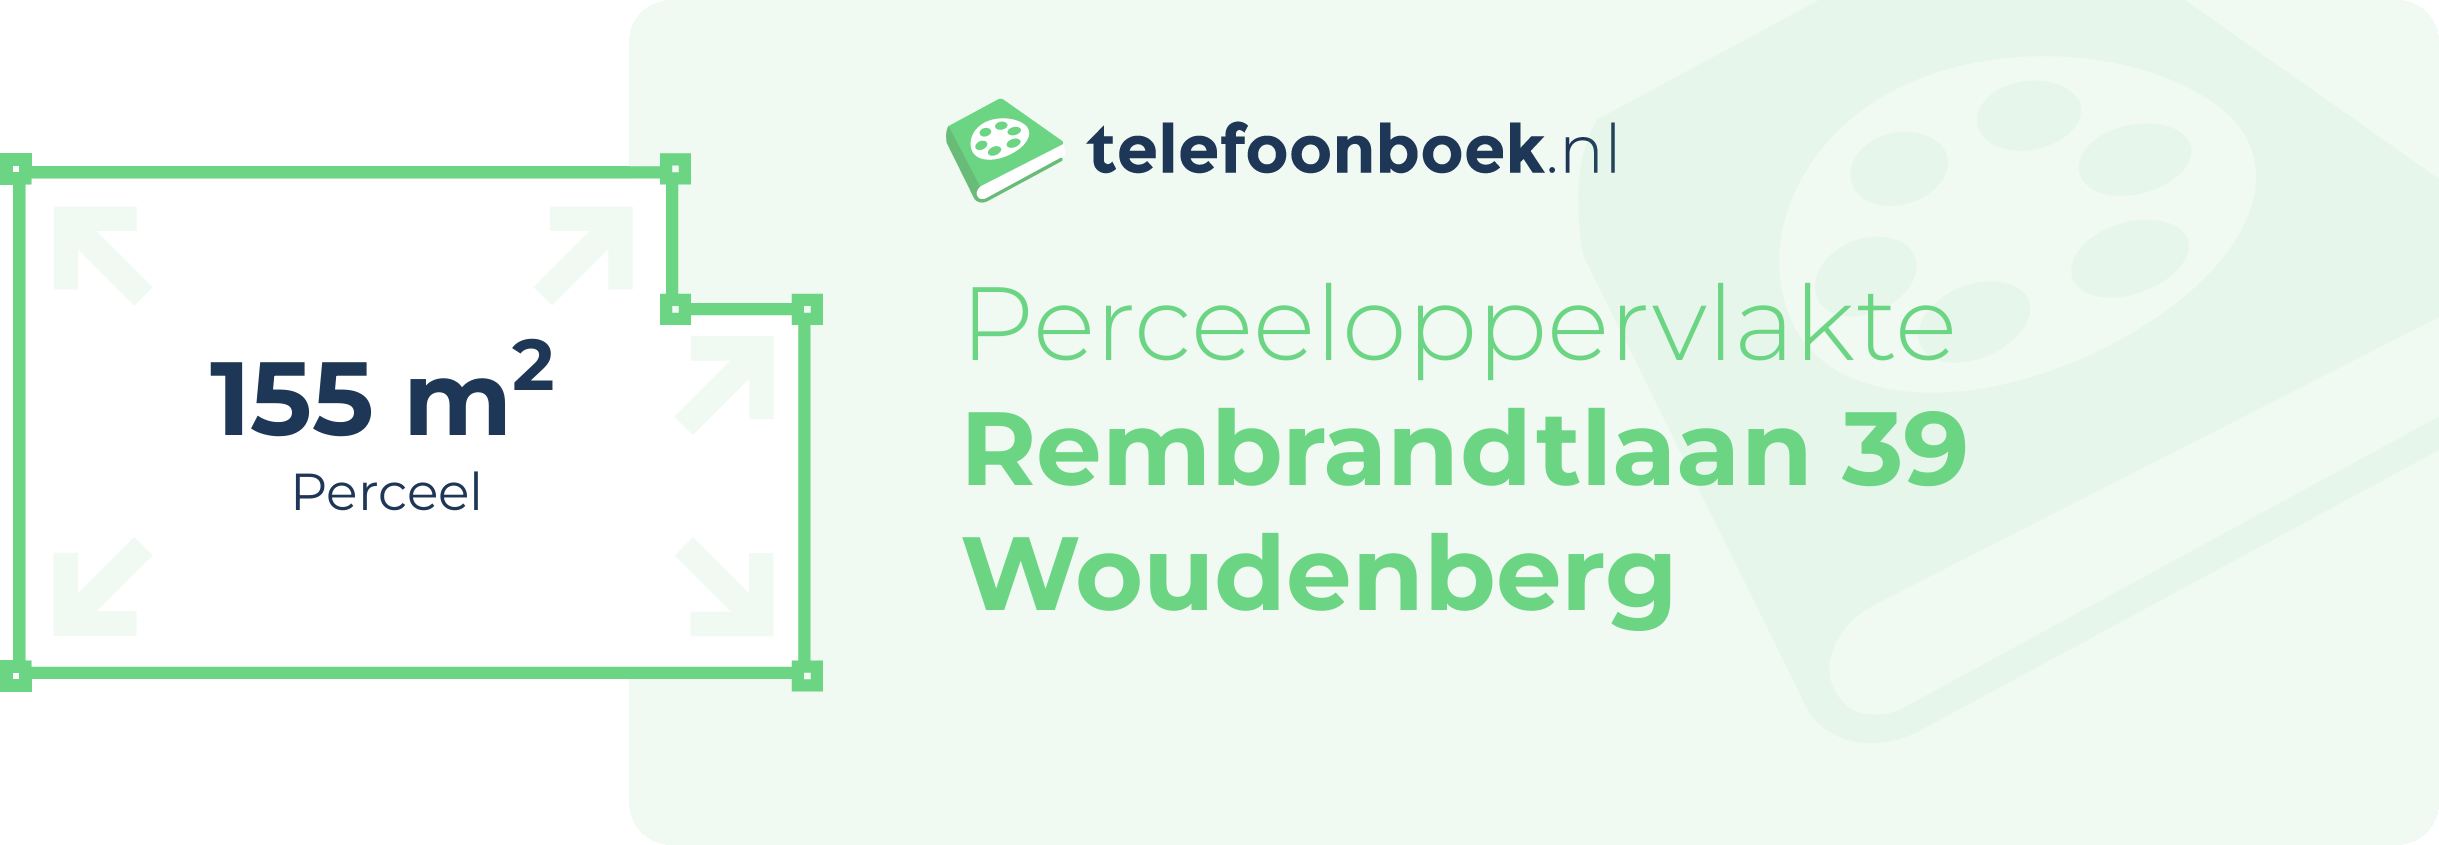 Perceeloppervlakte Rembrandtlaan 39 Woudenberg